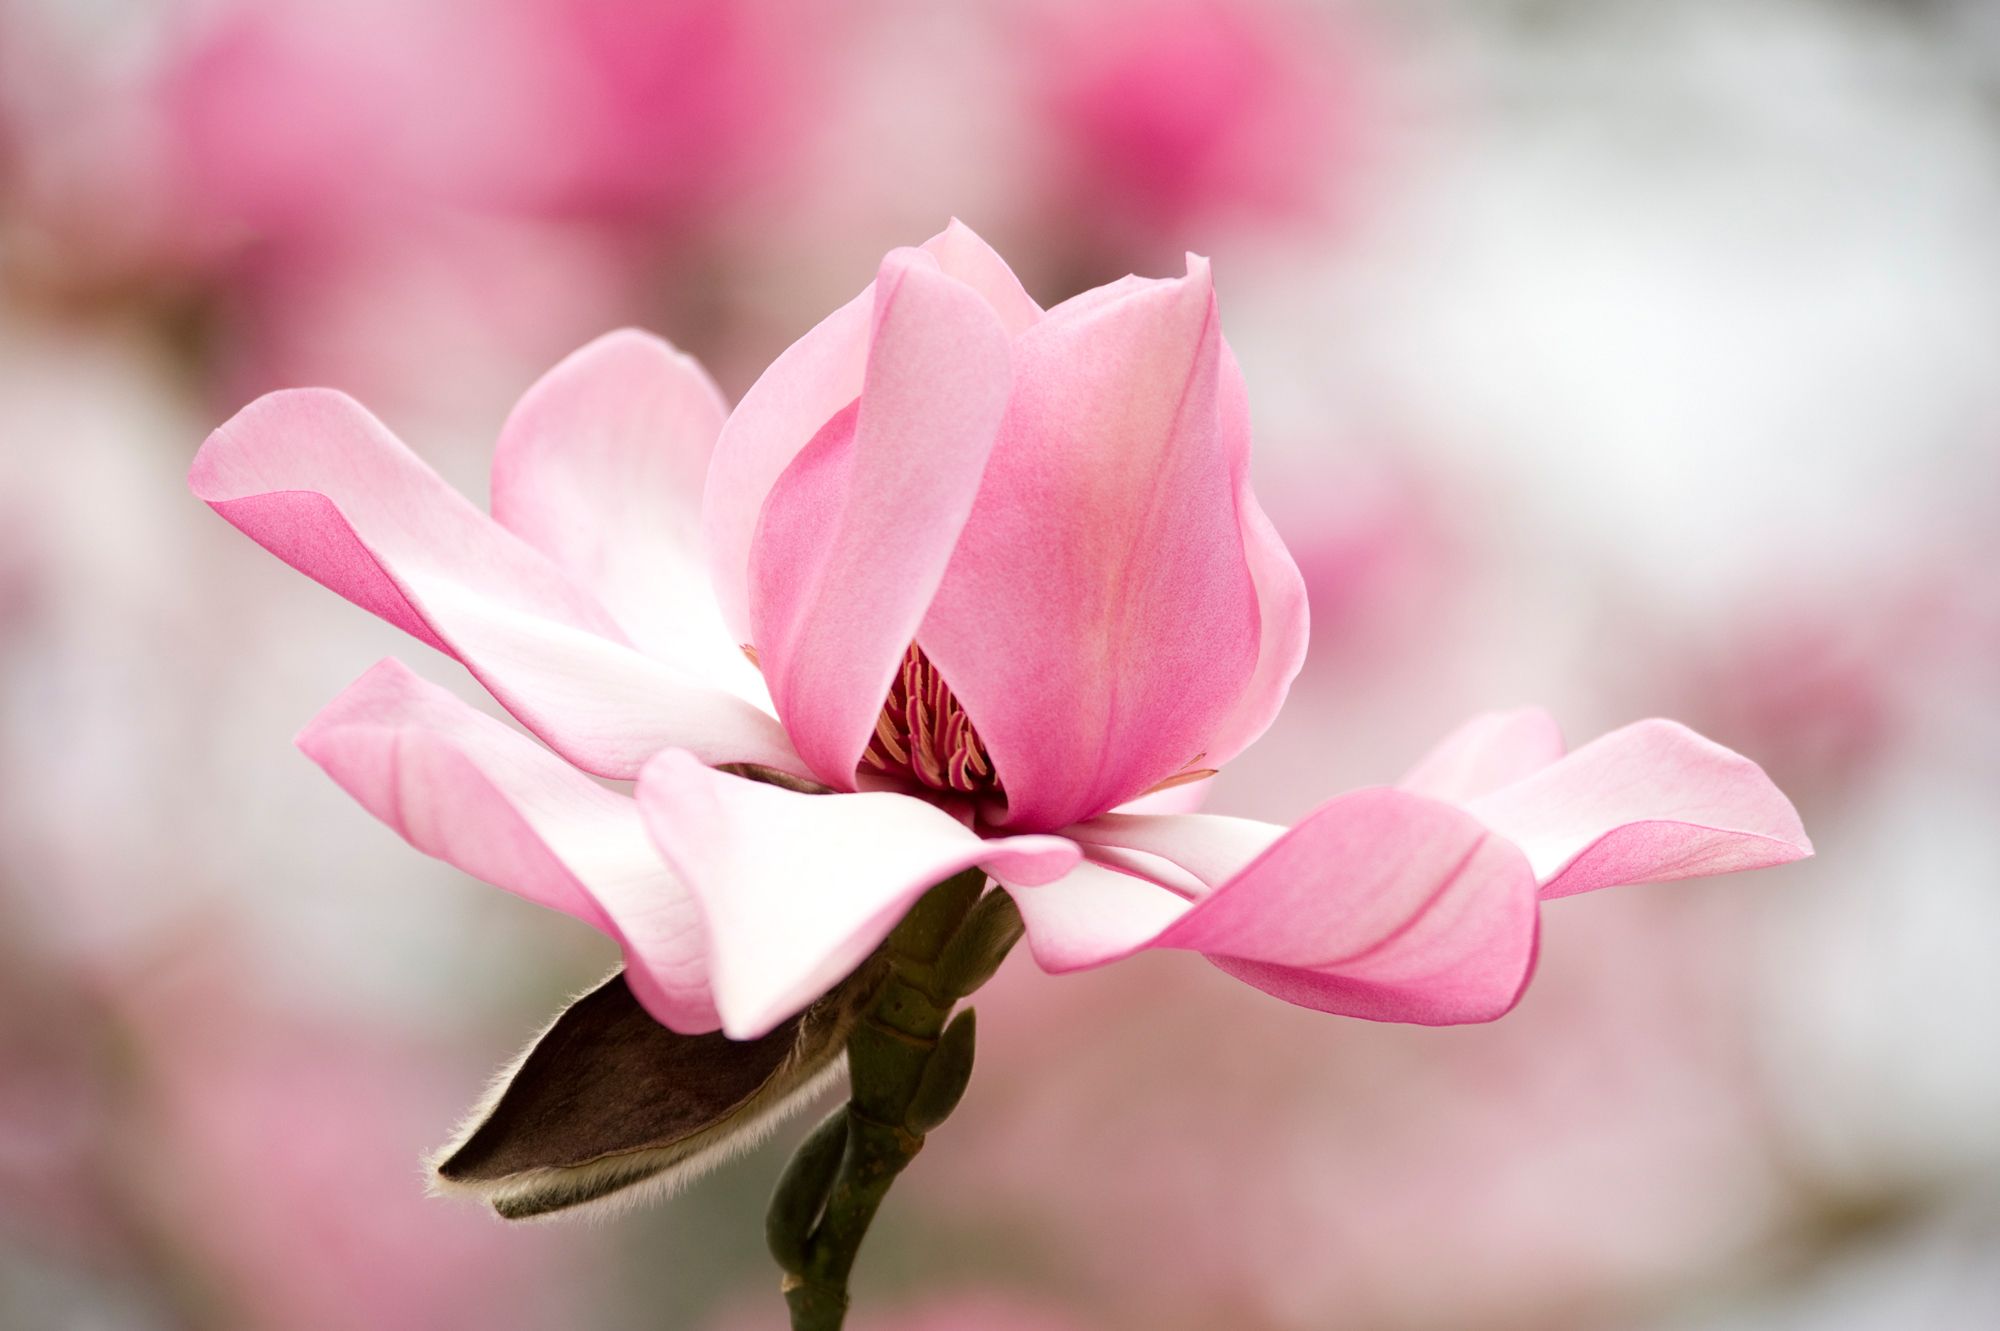 Magnolia 'Kew's Surprise' | Tree Flowers | Pinterest | Magnolia ...